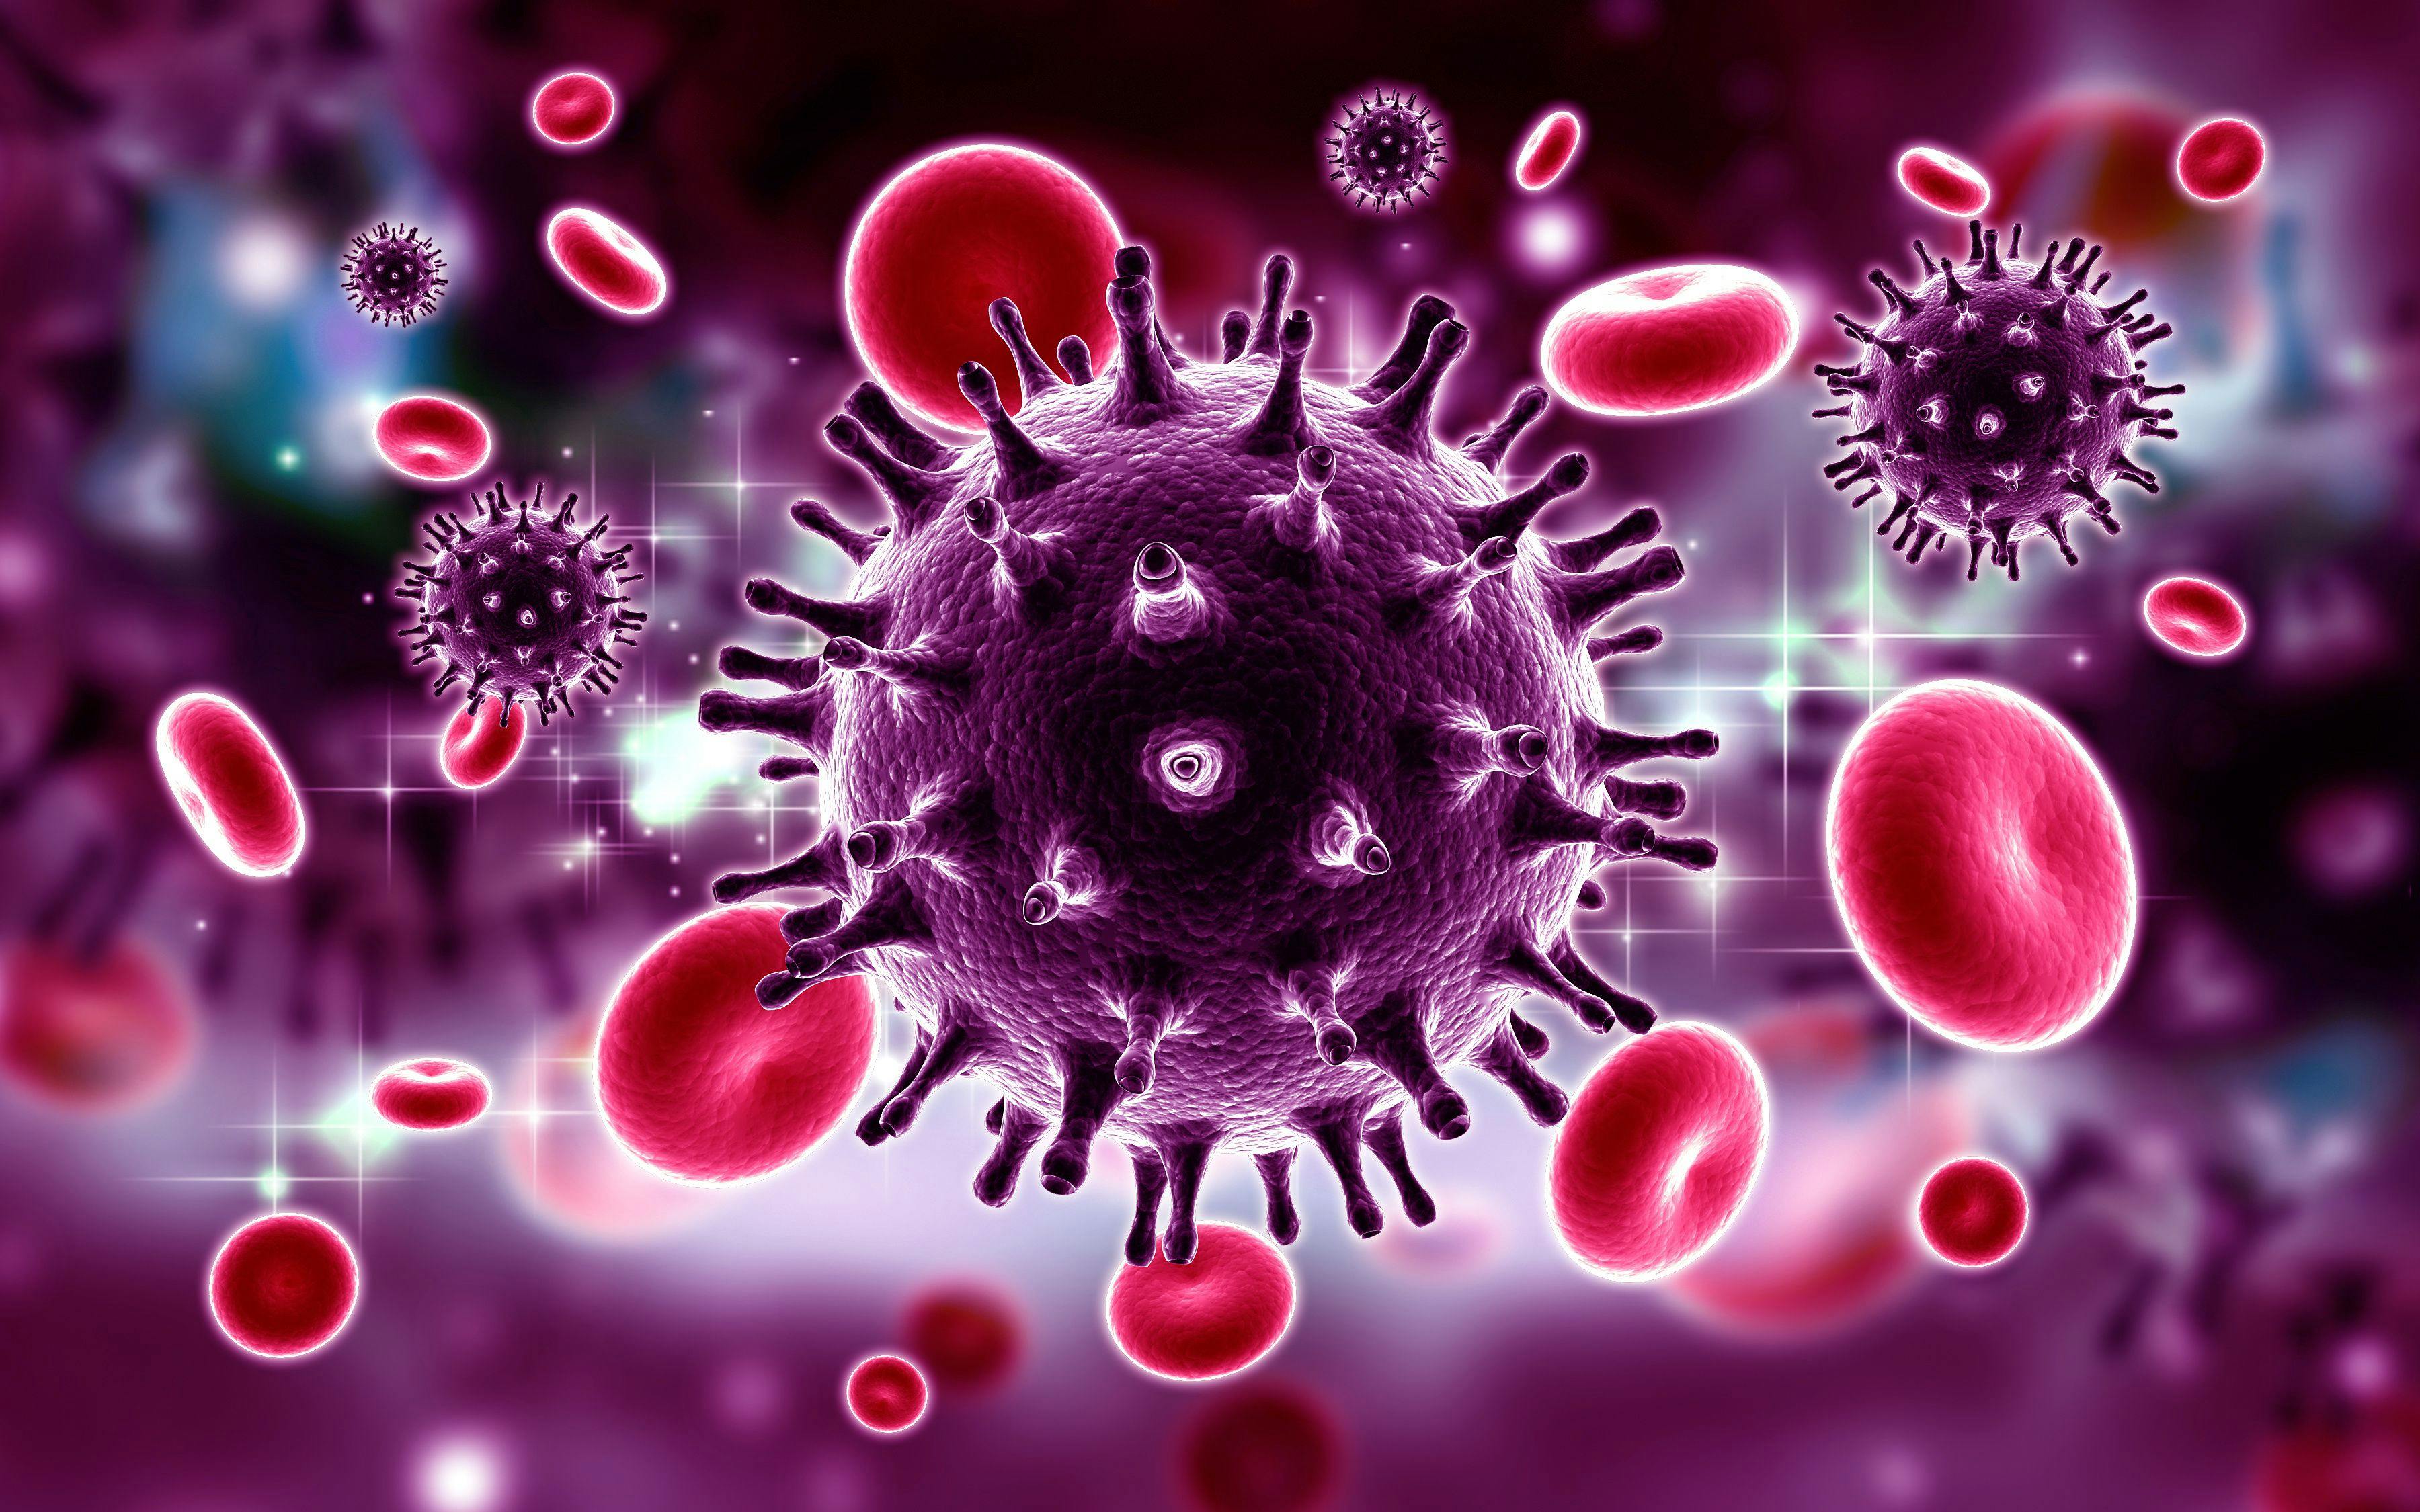 HIV Virus in Blood Stream | Image credit: RAJCREATIONZS - stock.adobe.com